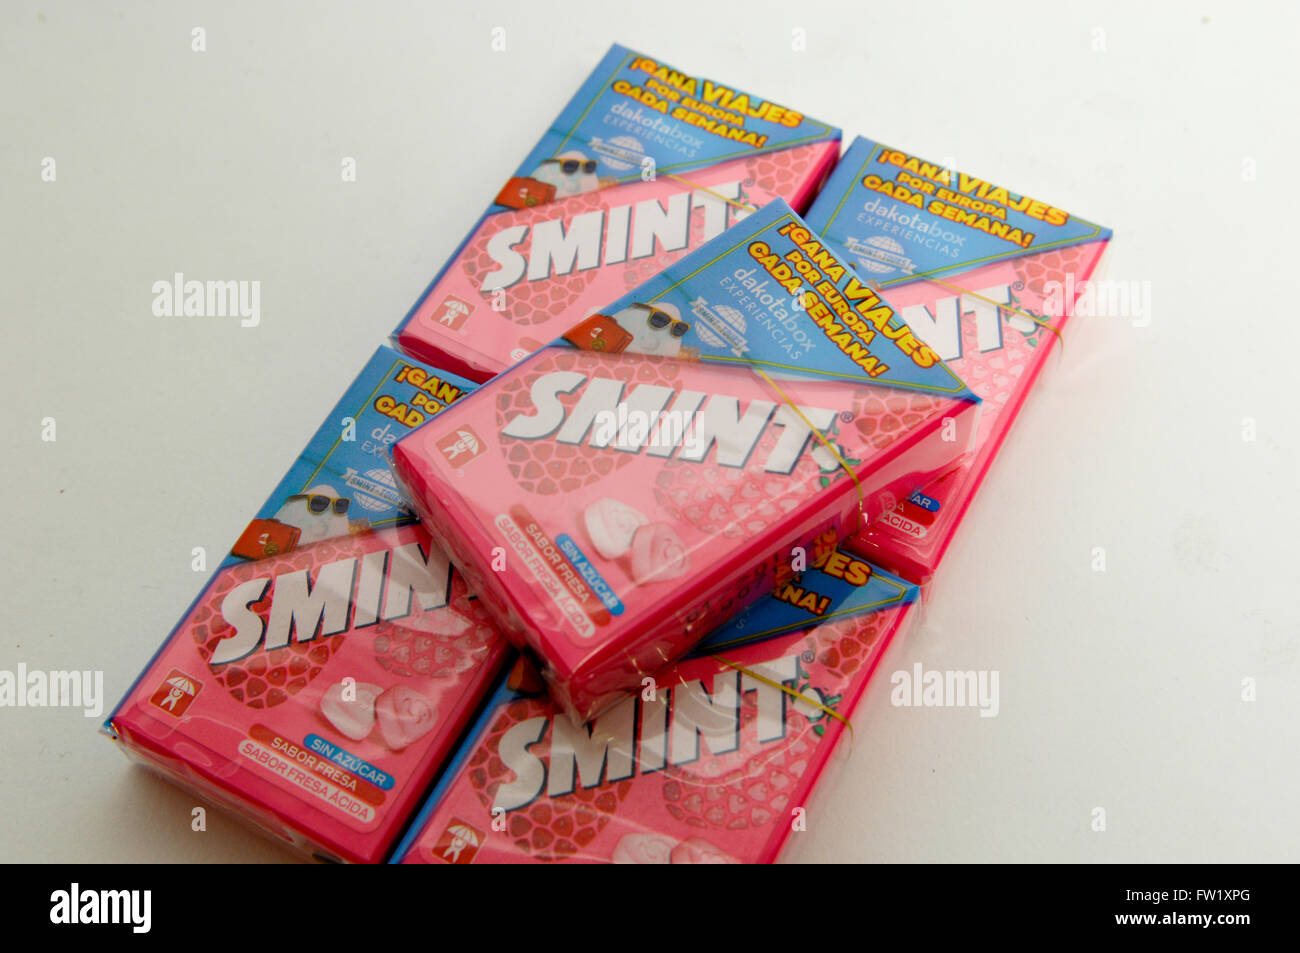 https://c8.alamy.com/comp/FW1XPG/smint-is-a-type-of-breath-mint-every-smint-candy-has-a-triangular-FW1XPG.jpg